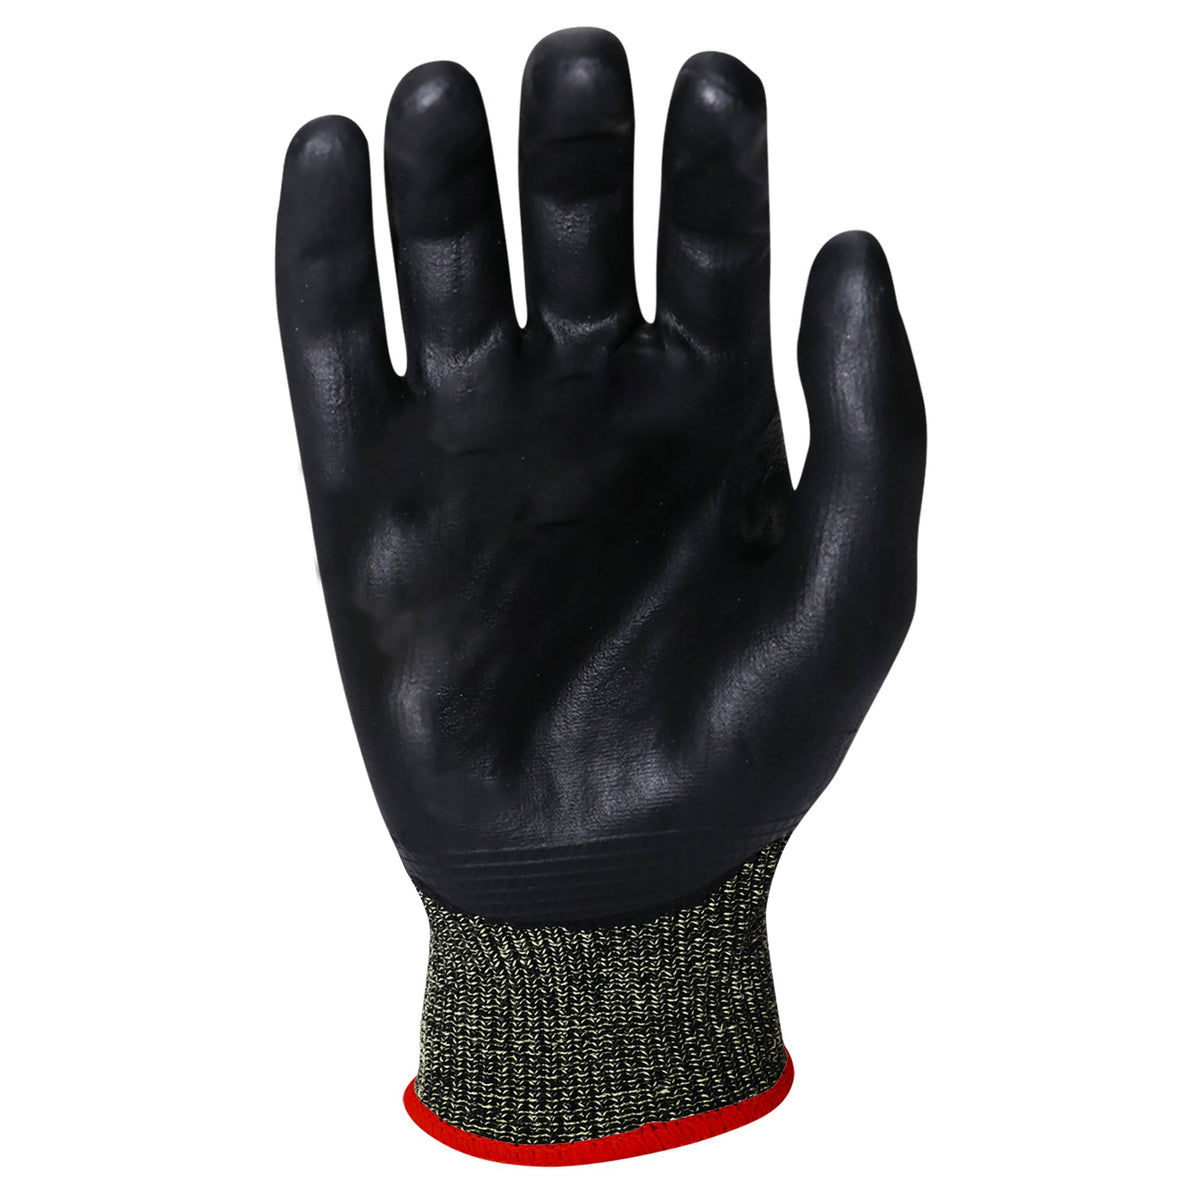 A5A-110 Aramid Cut Glove with Nitrile Micro-Foam Coating 12pair